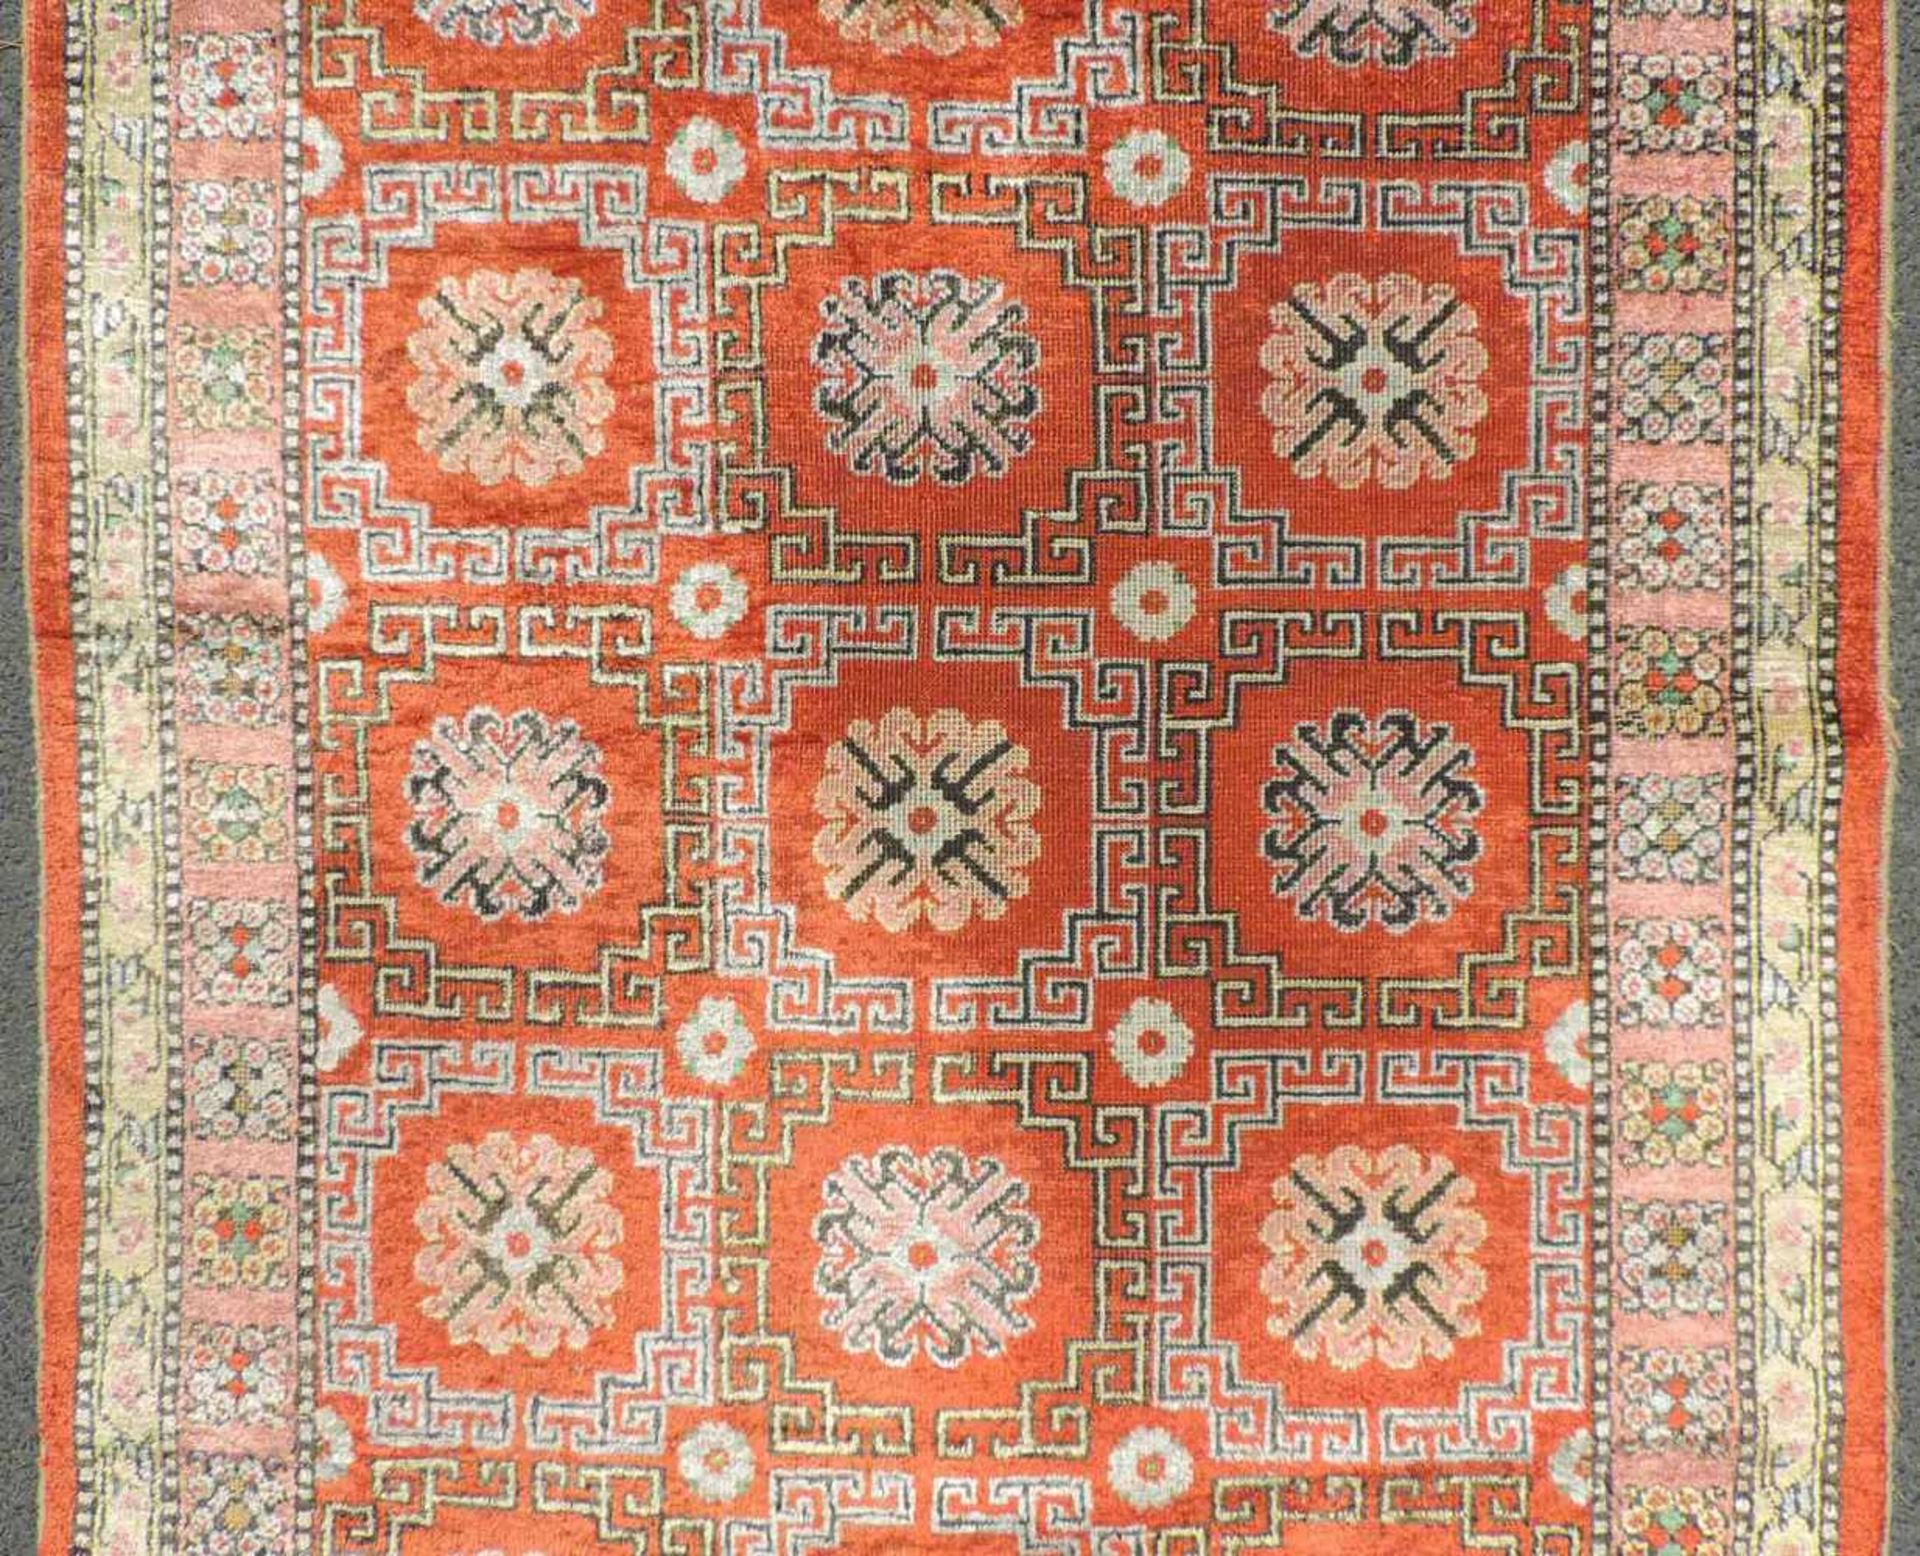 Khotan Seidenteppich. Zentralasien. Ost - China. Antik, um 1900. 209 cm x 124 cm. Orientteppich. - Bild 3 aus 6